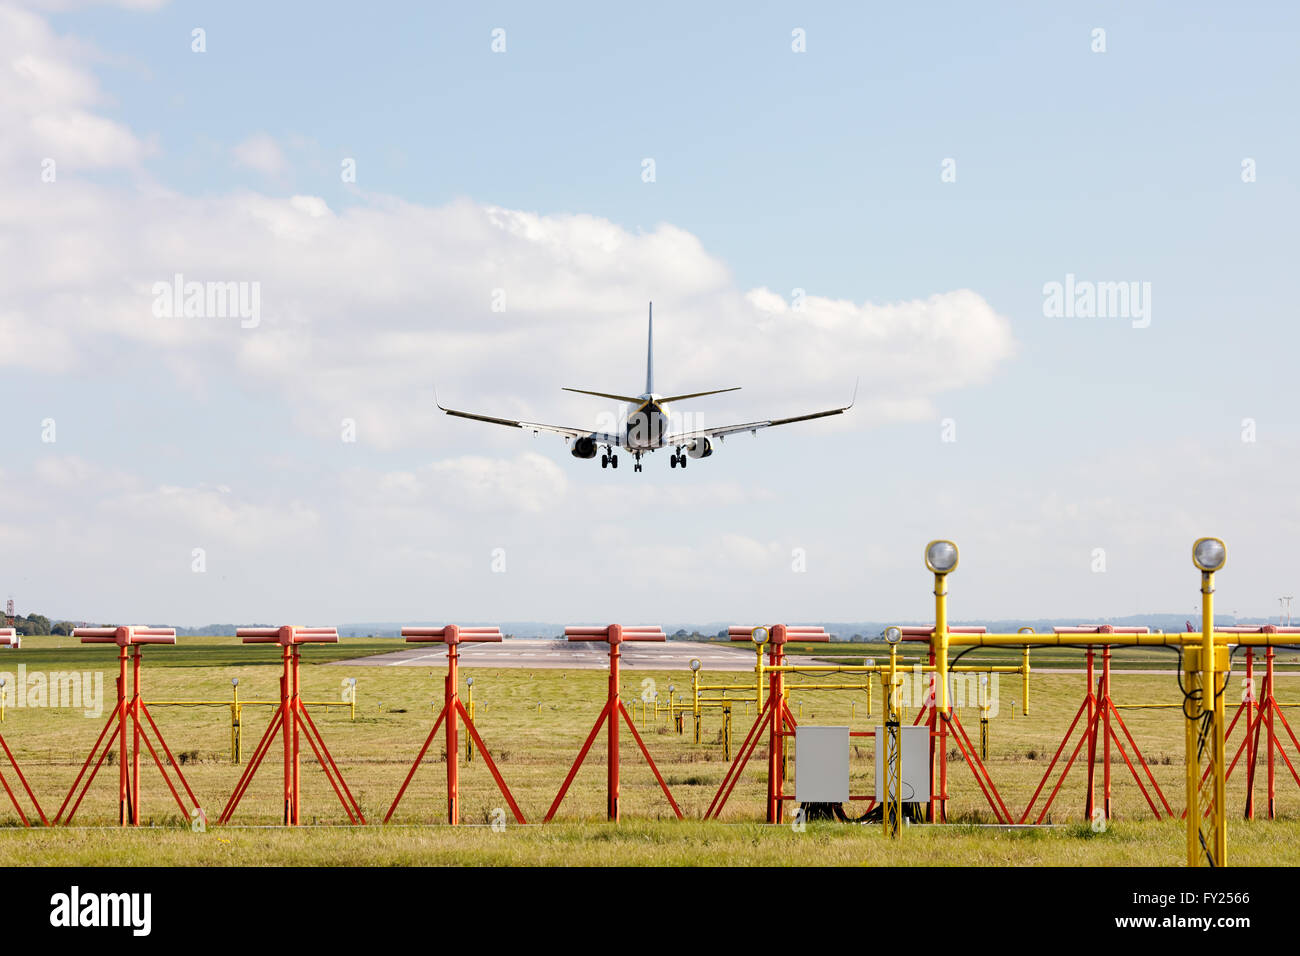 Passenger aircraft landing on runway Stock Photo